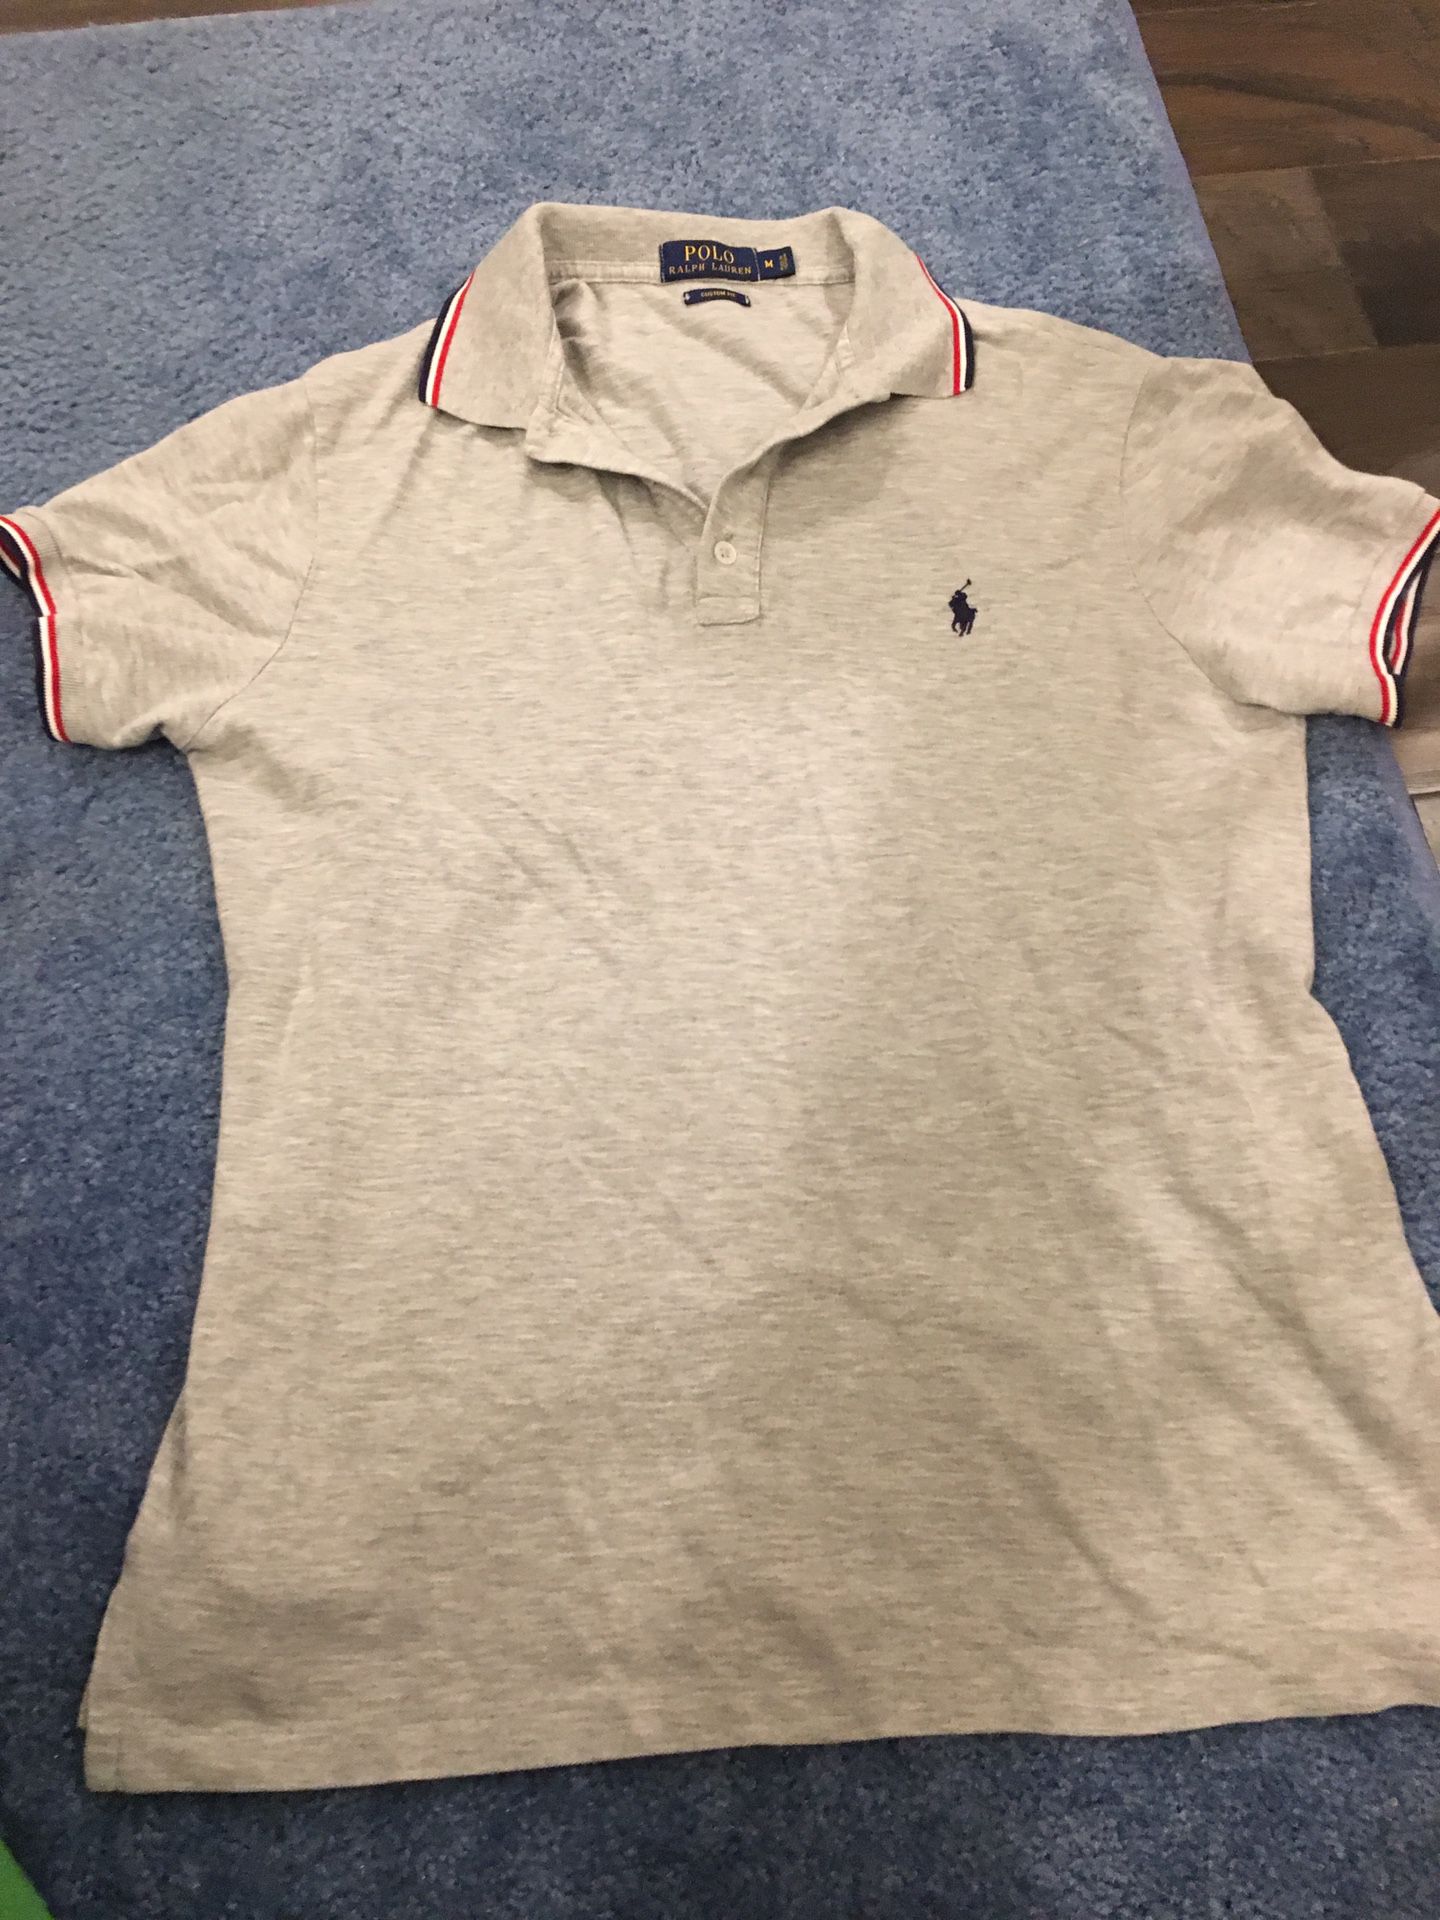 Kids polo medium shirt with stripes